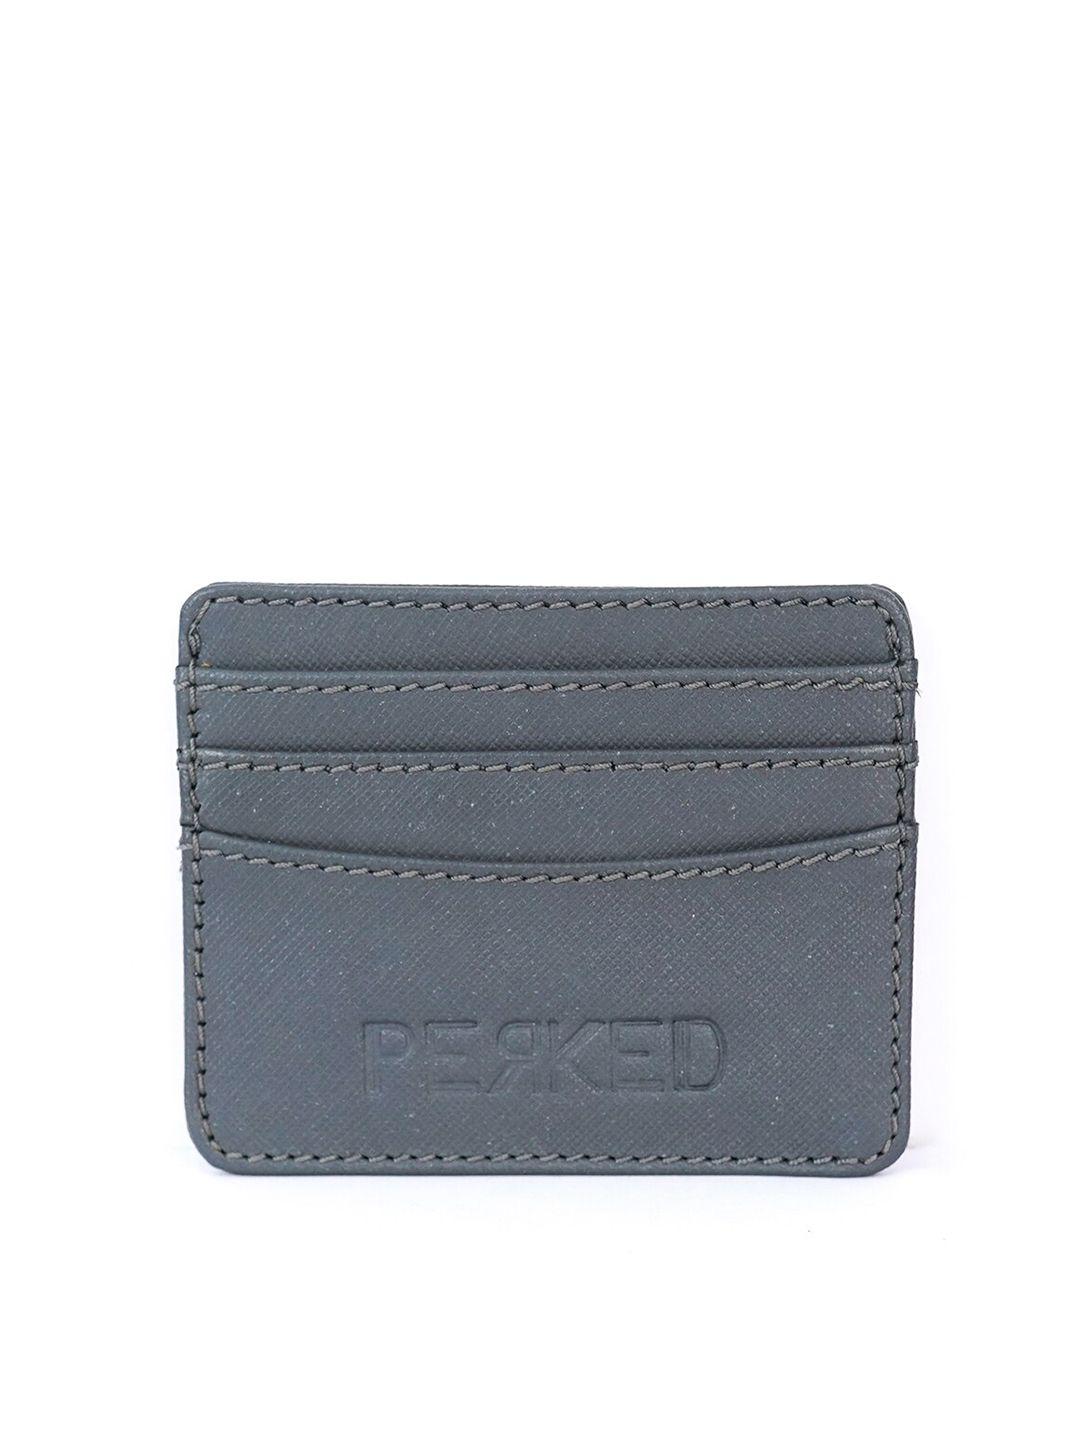 perked unisex grey leather card holder